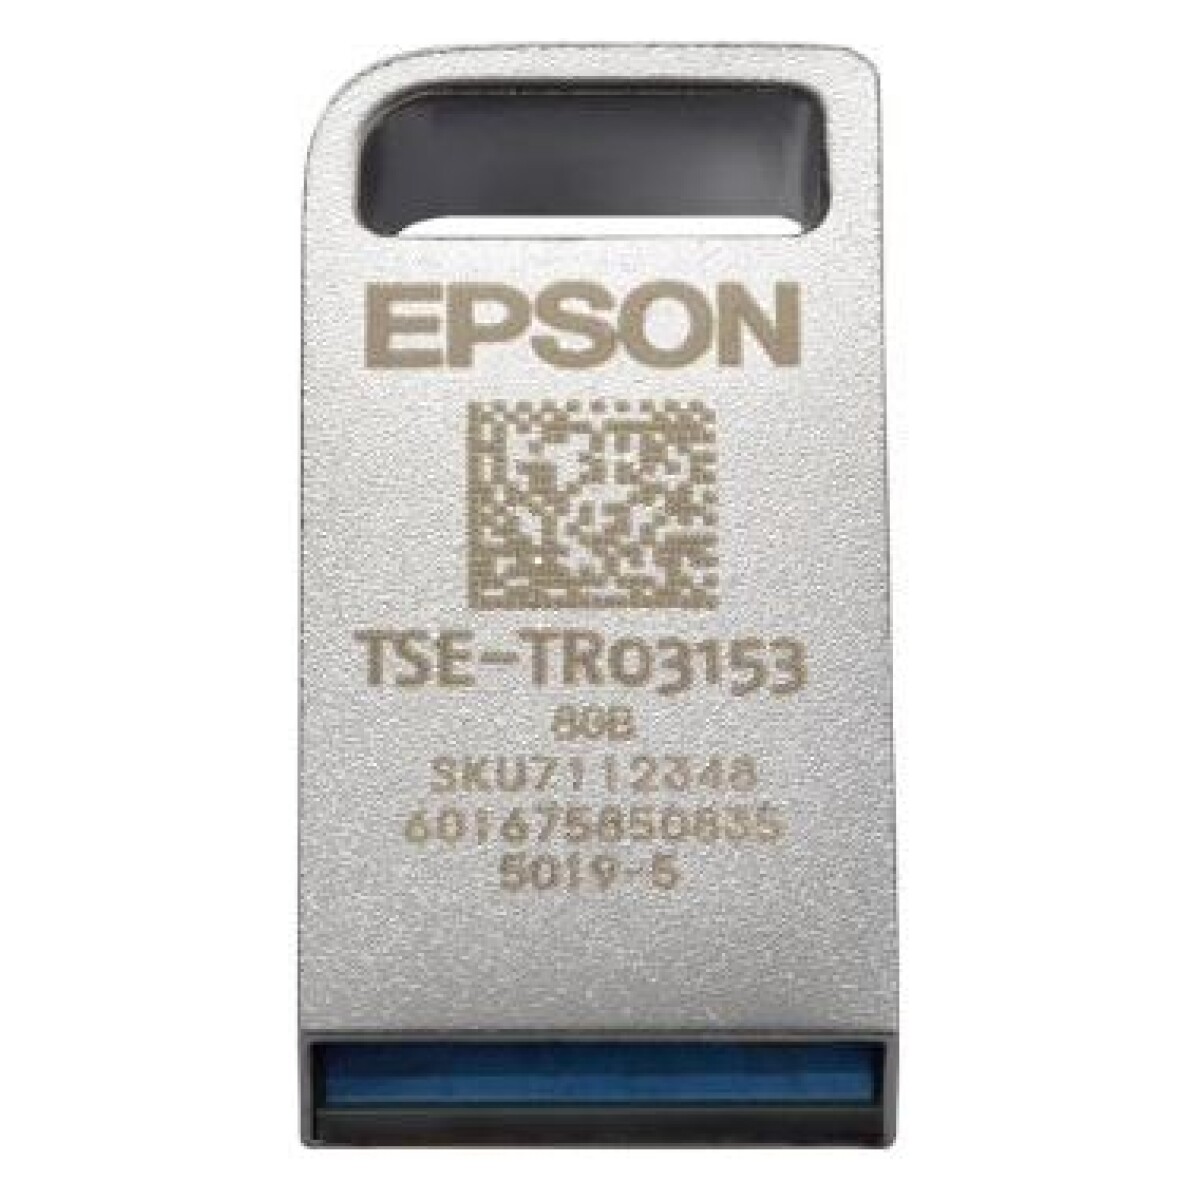 Epson TSE (Technical Security Module)